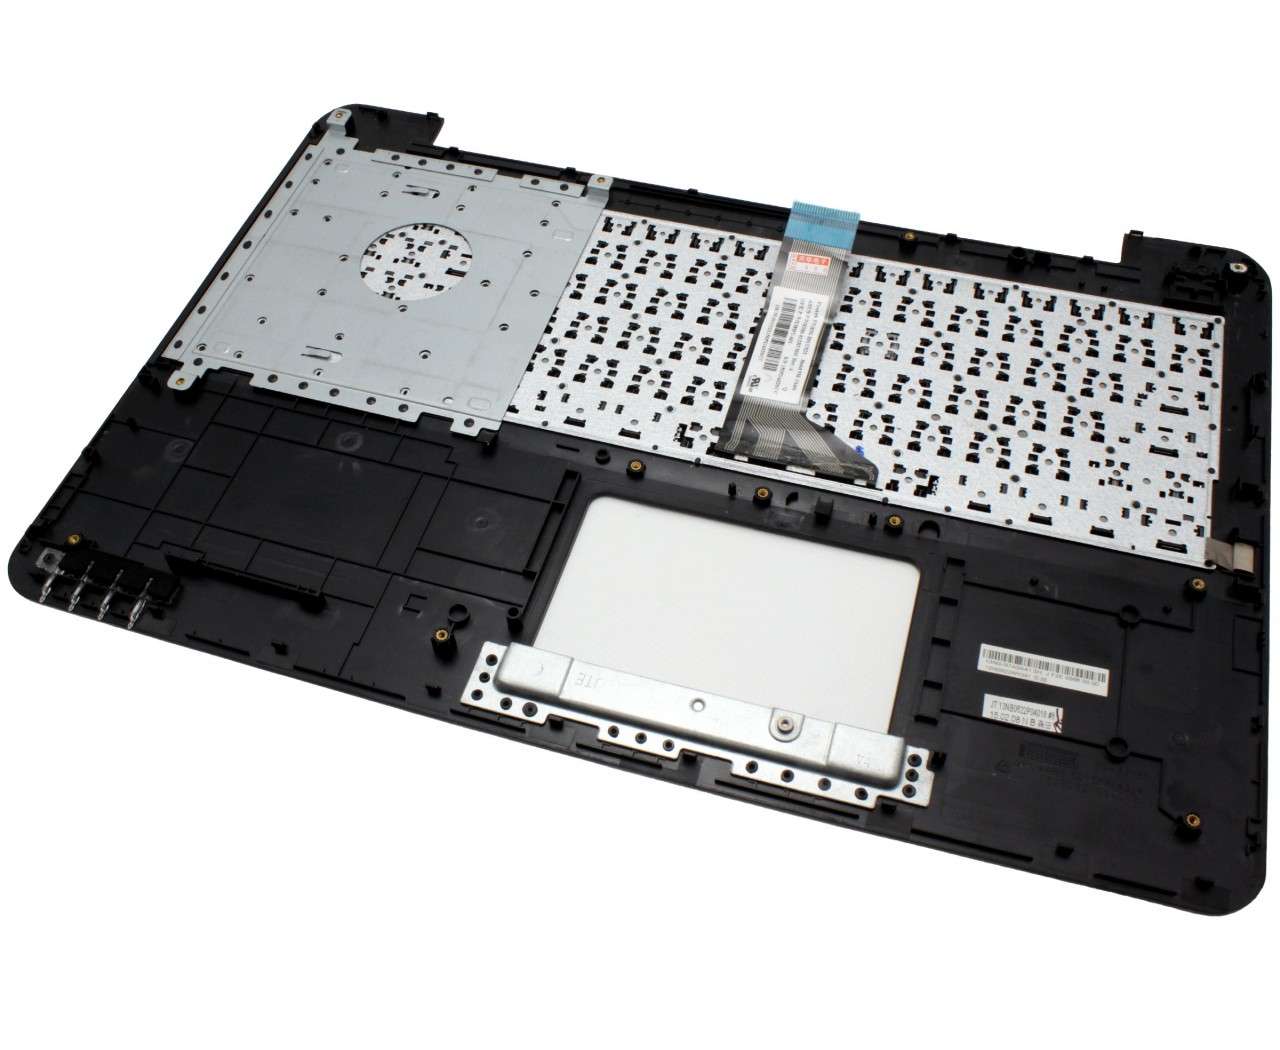 Tastatura Asus K554L Neagra cu Palmrest argintiu